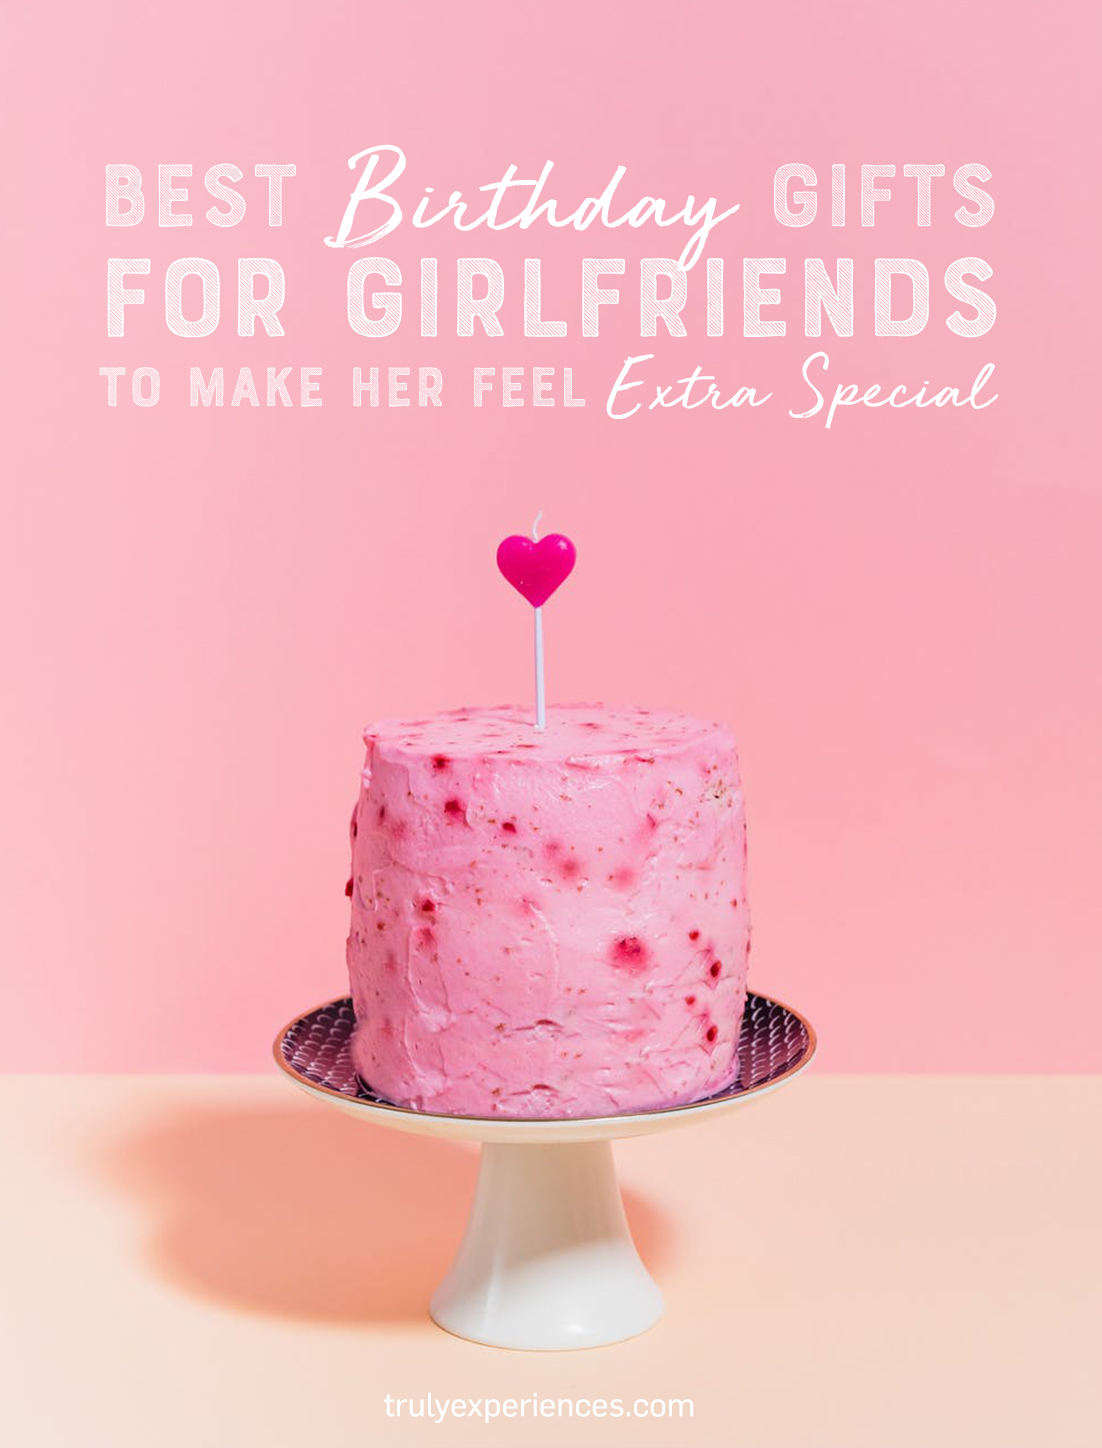 Girlfriend birthday gift ideas  Birthday gifts for girlfriend Happy  birthday fun Birthday ideas for her